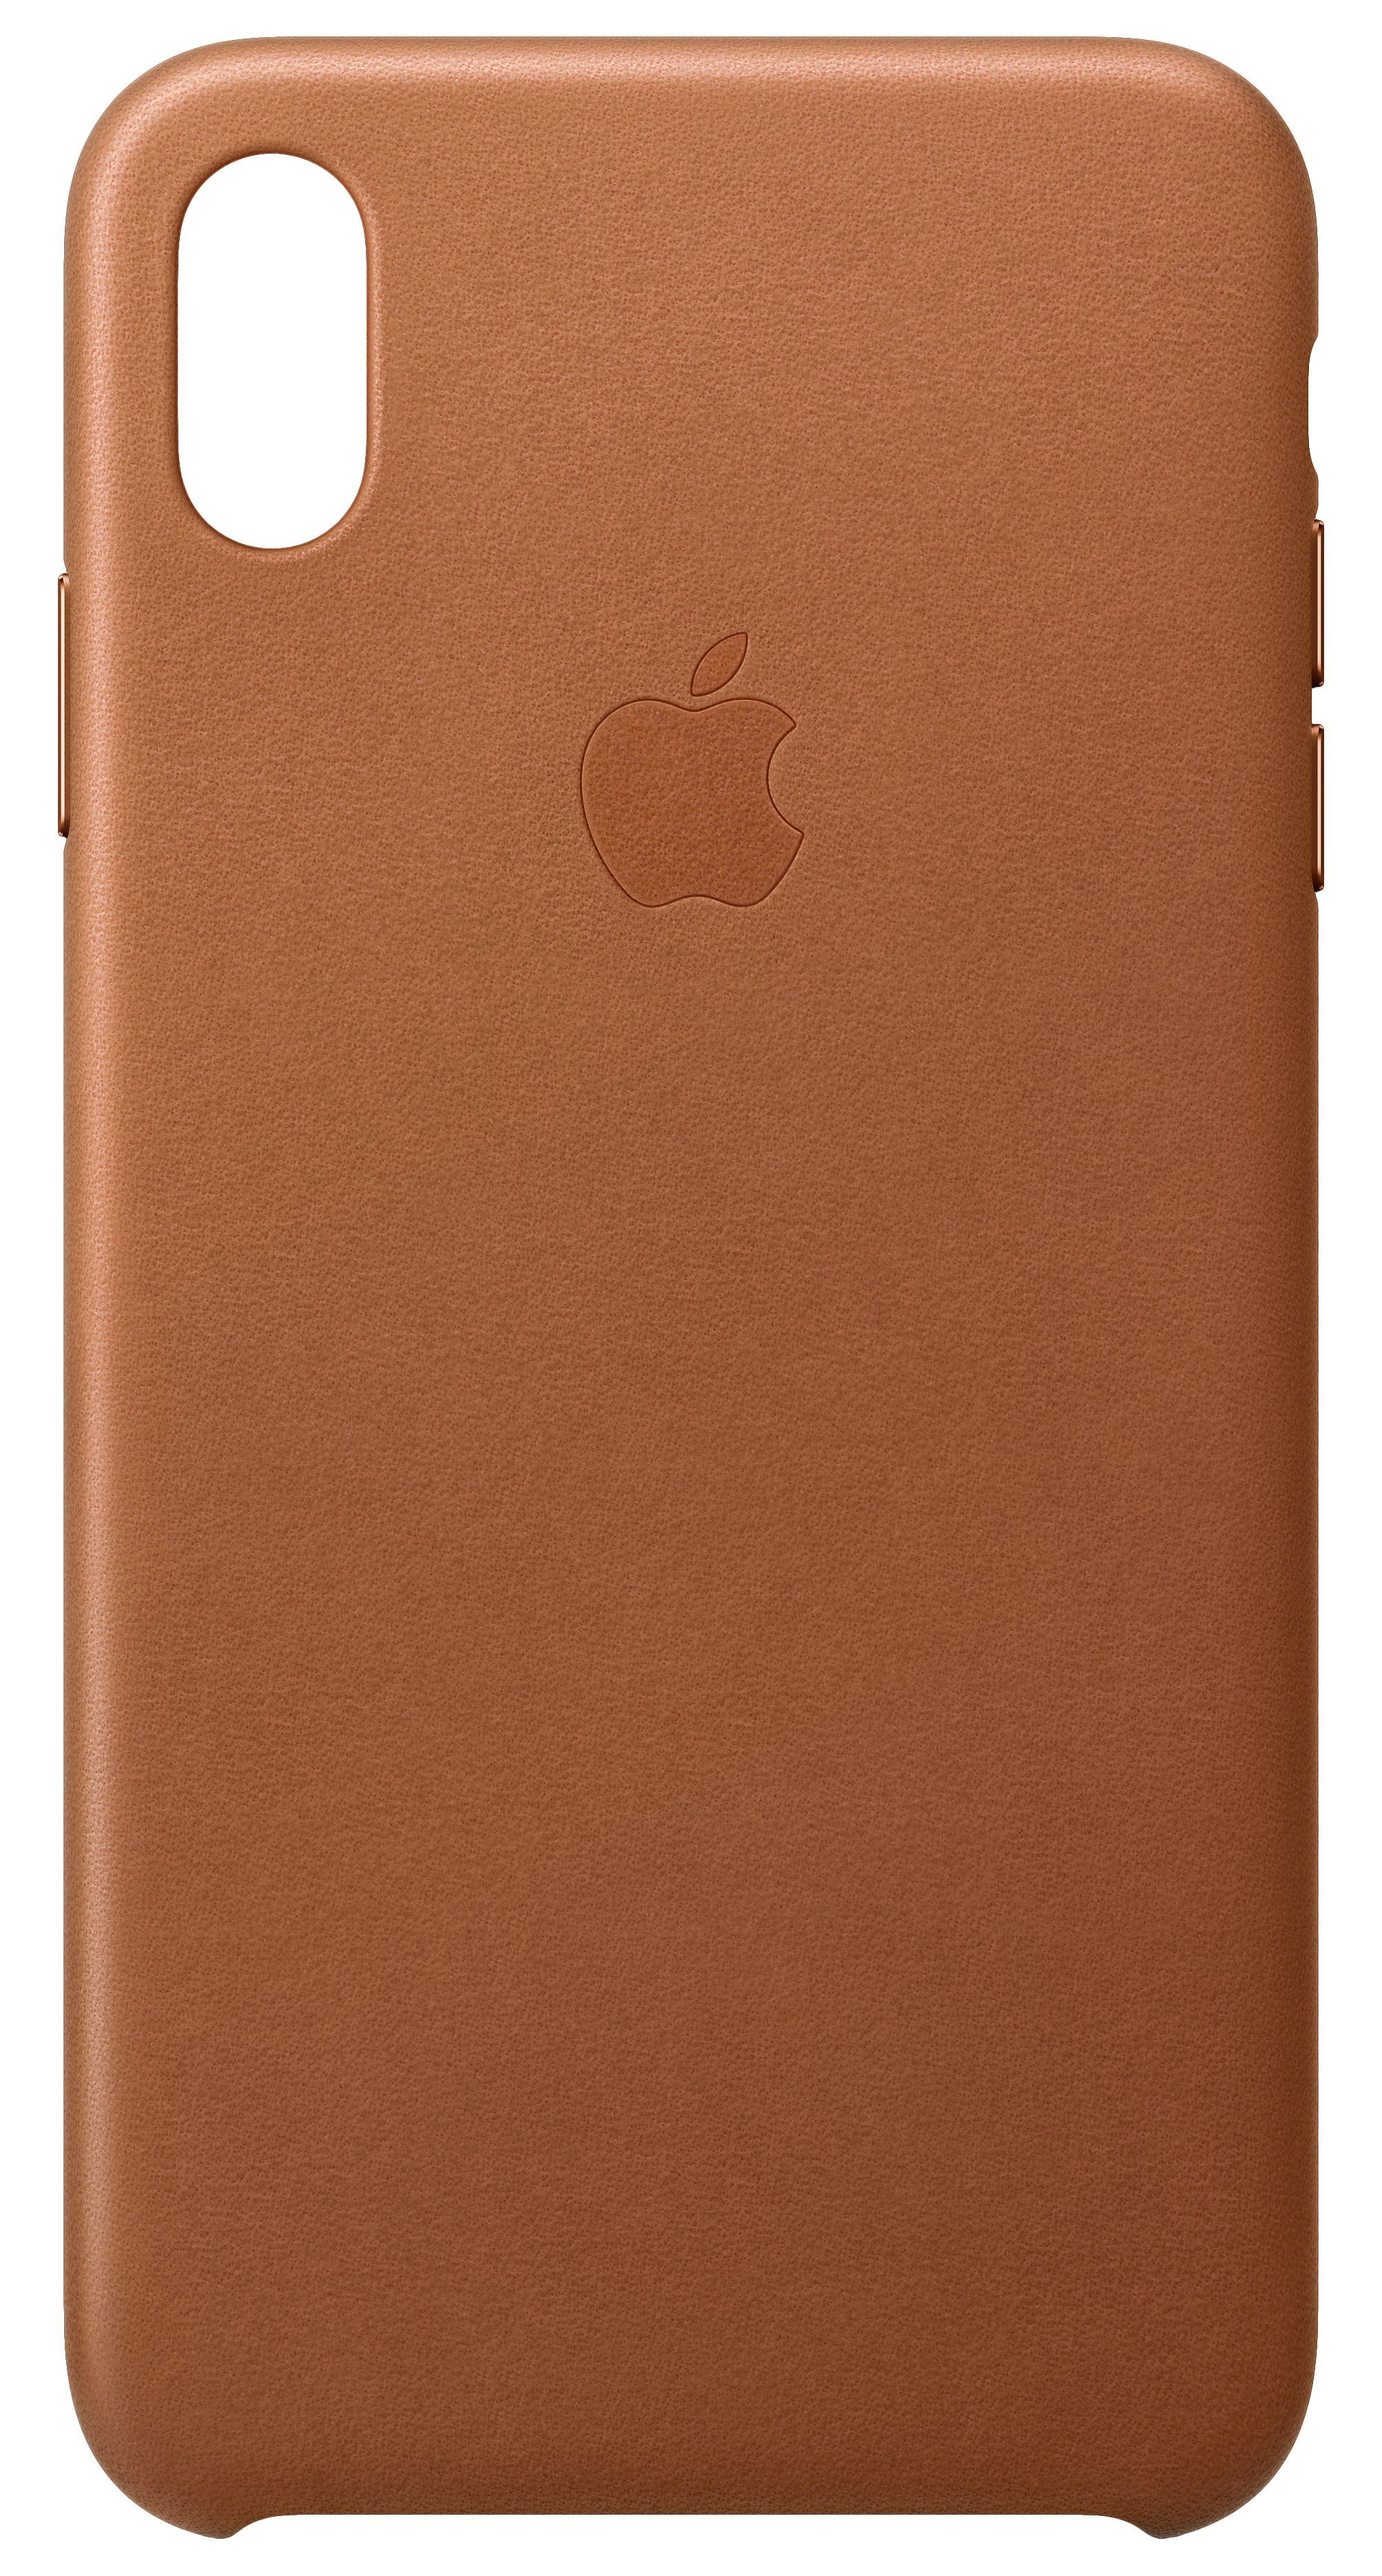 Apple MRWV2ZM/A bruin / iPhone XS Max